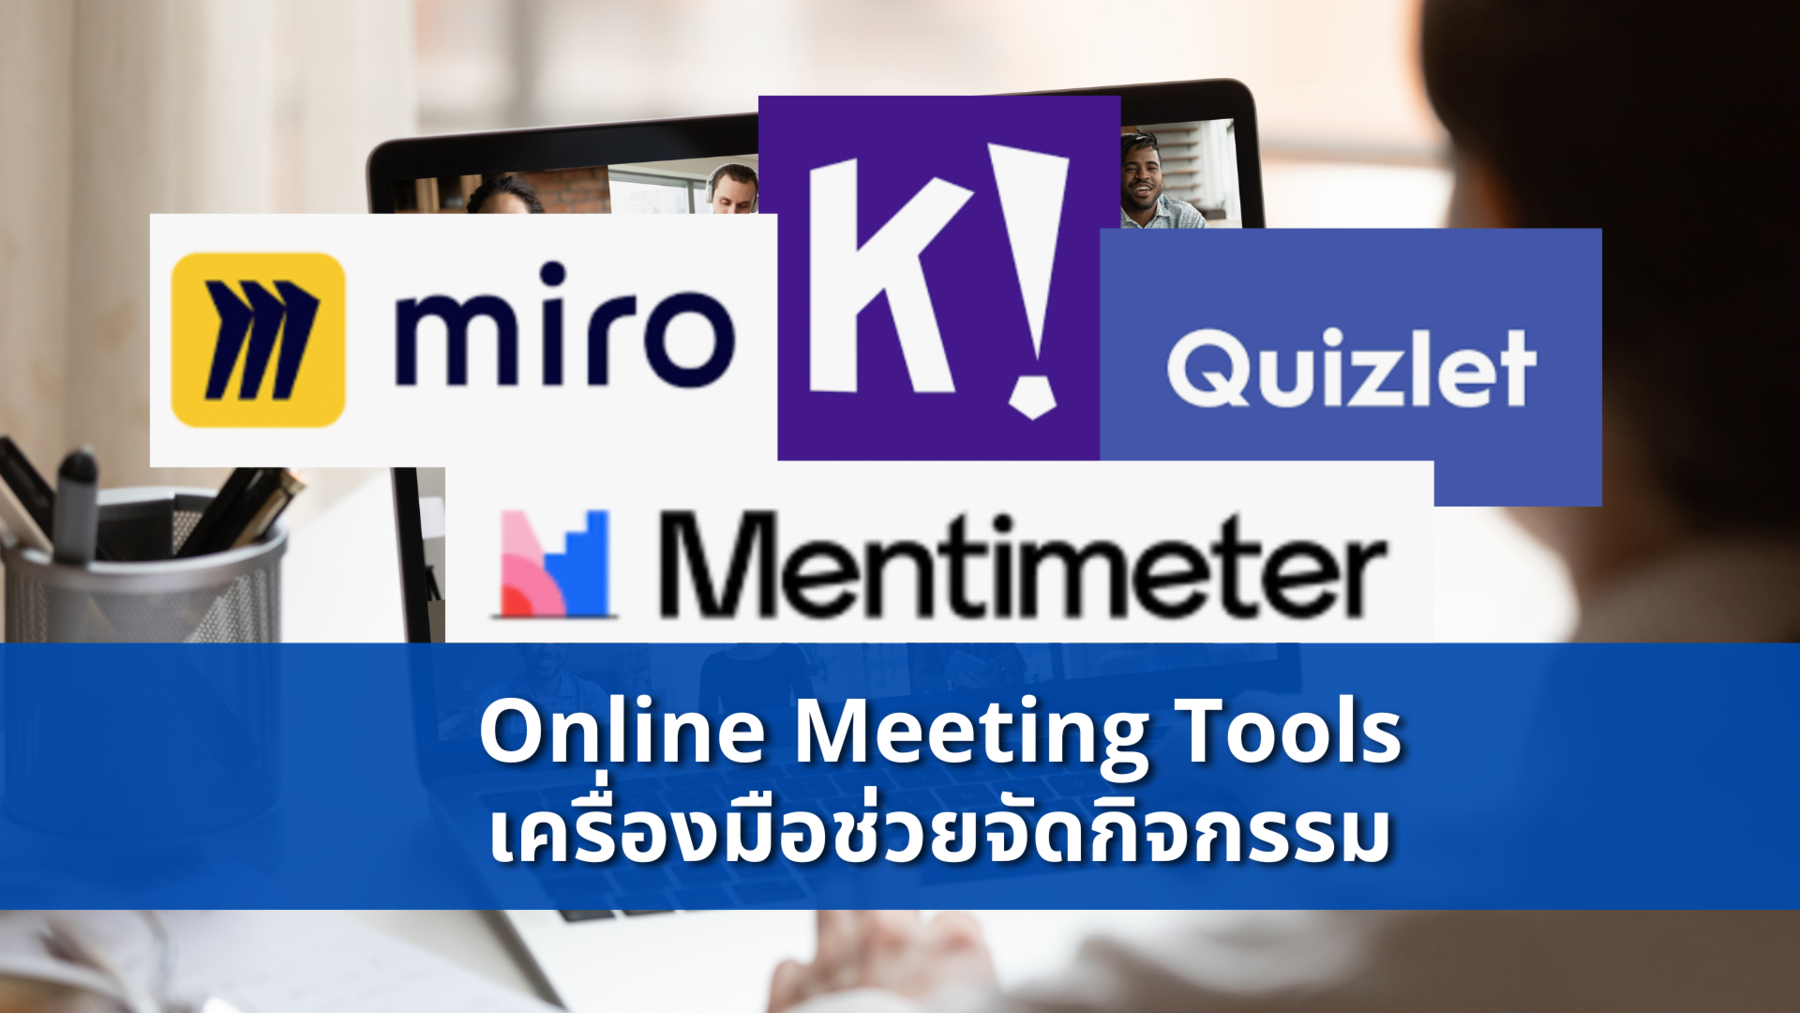 Online Meeting Tools เครื่องมือช่วยจัดกิจกรรม